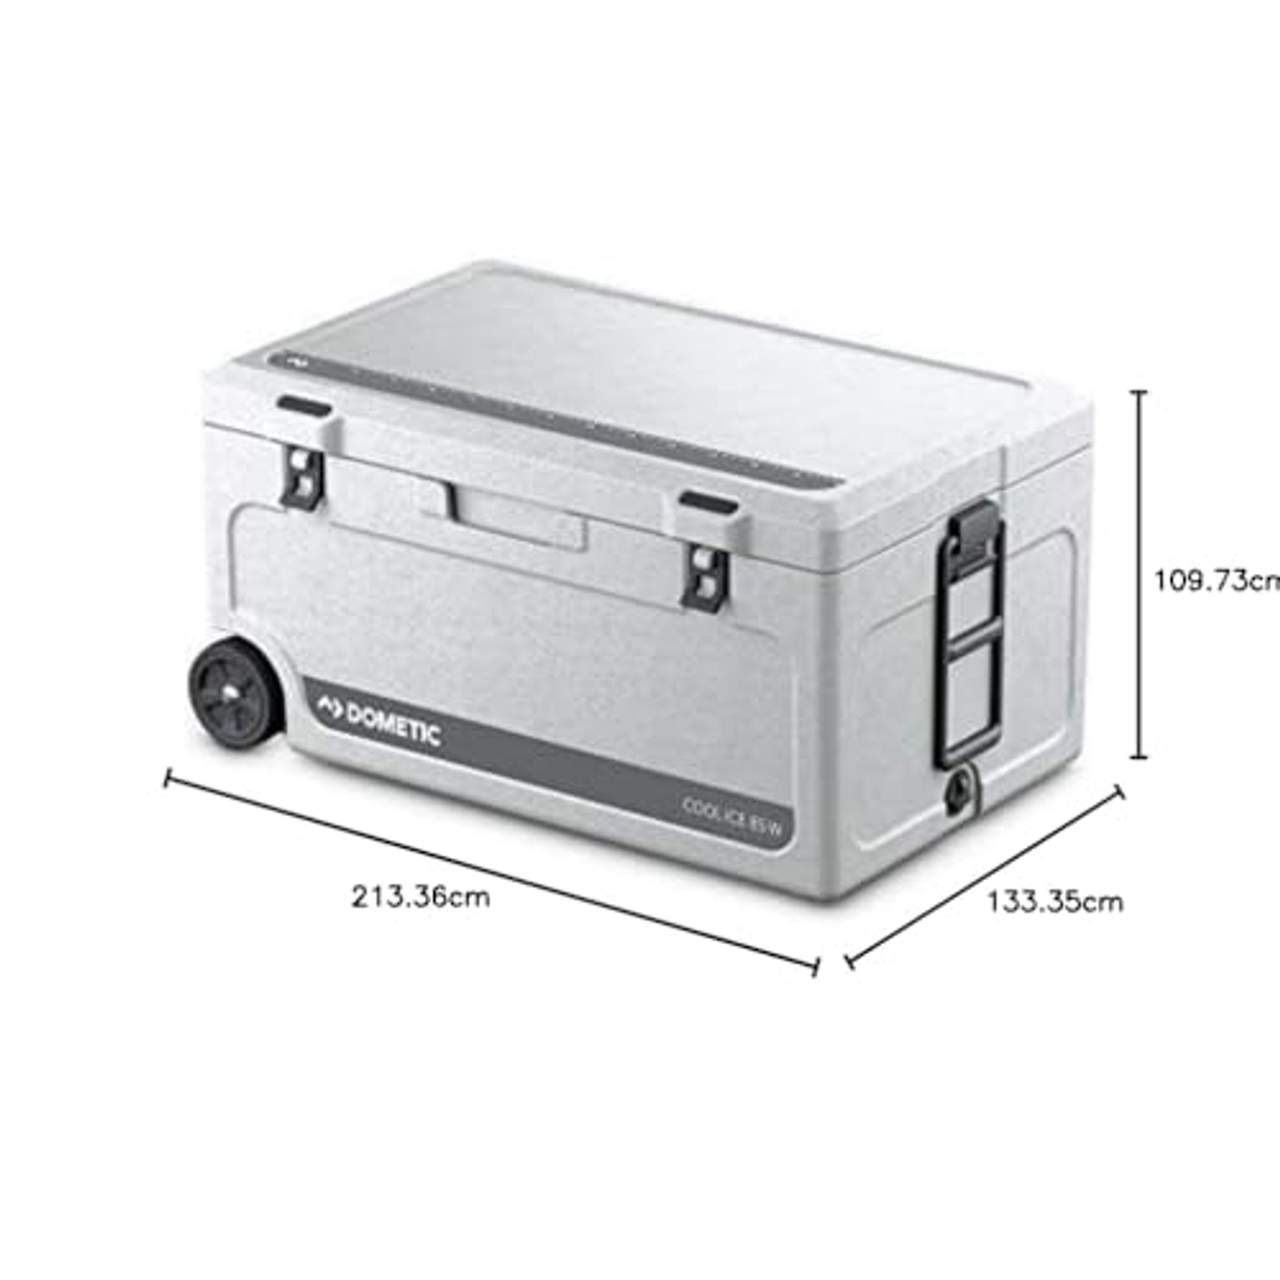 DOMETIC Cool-Ice CI 85W tragbare Passiv-Kühlbox